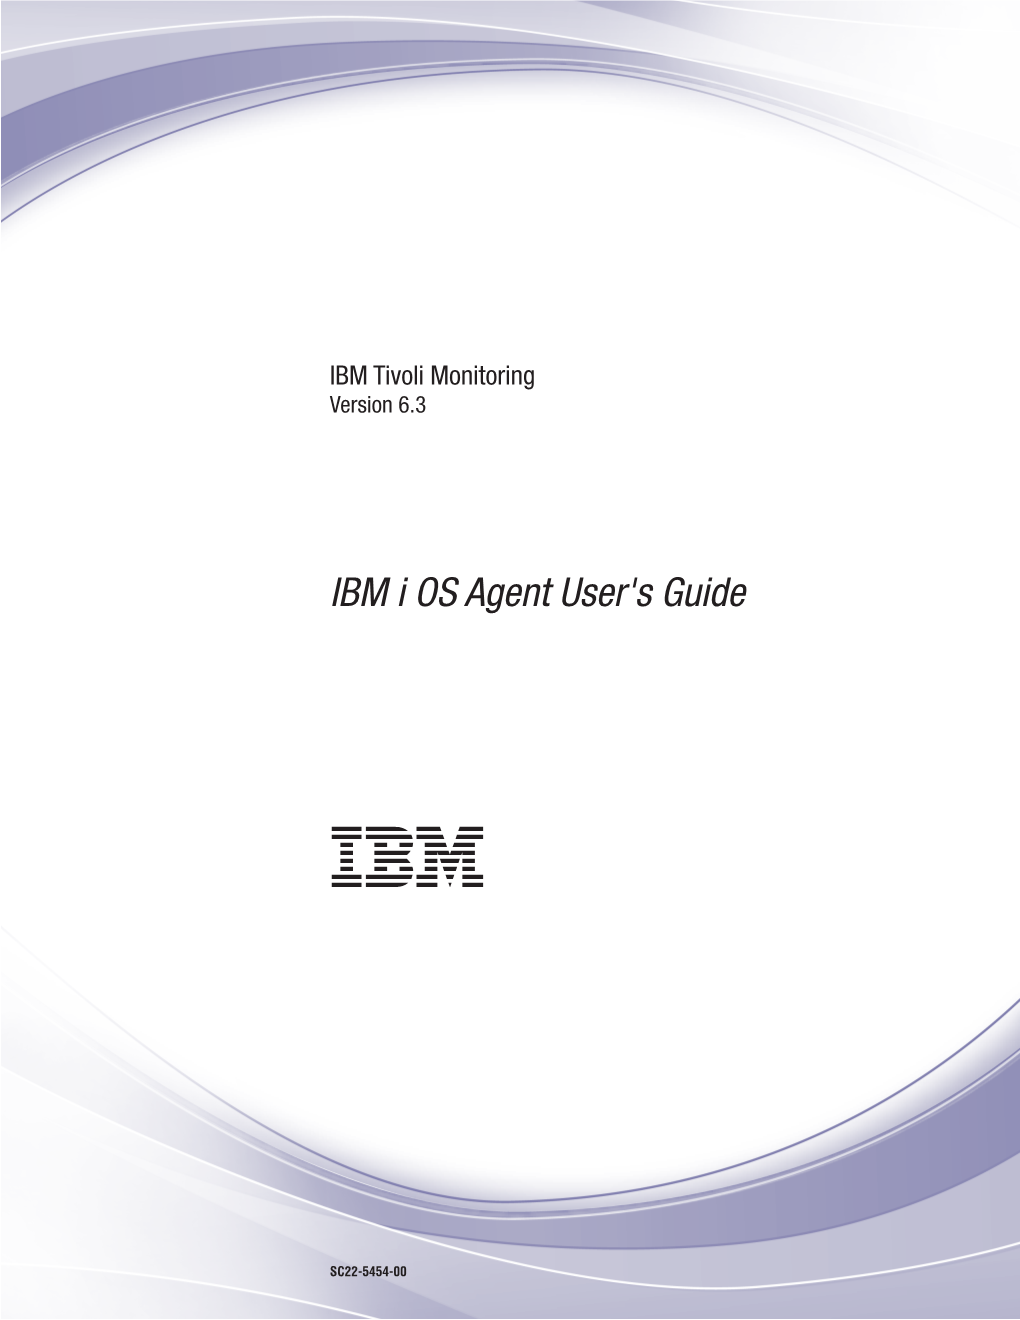 IBM Tivoli Monitoring: IBM I OS Agent User's Guide IBM I Utilization Comparison for Multiple Effects on Summarized Attributes